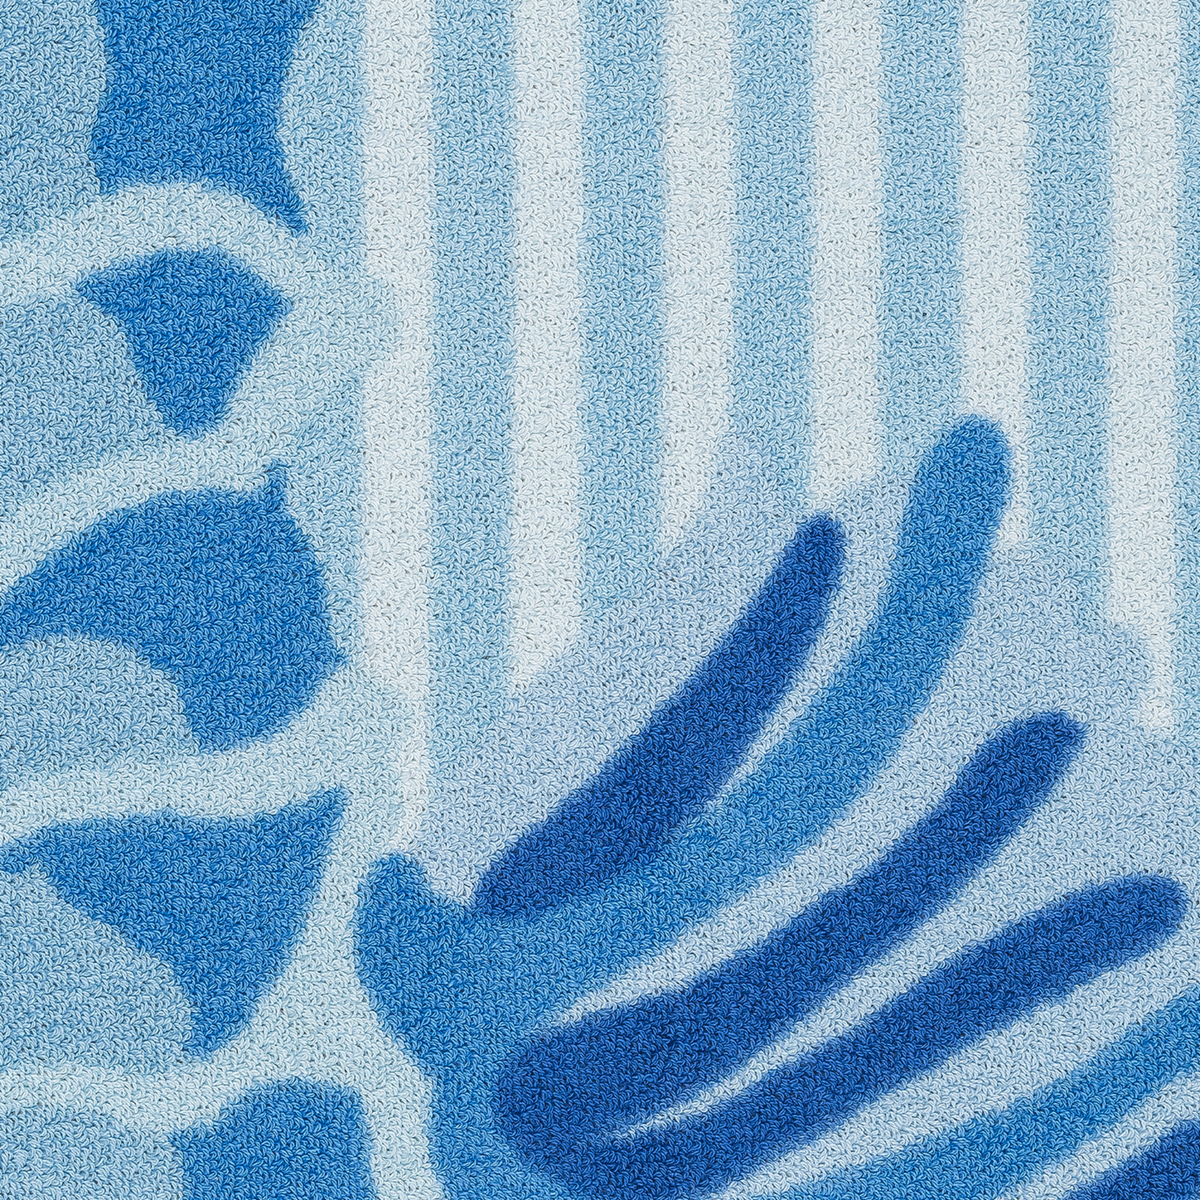 Fabric Sample of Matouk Schumacher Seahorse Beach Towels in Bermuda Blue Color